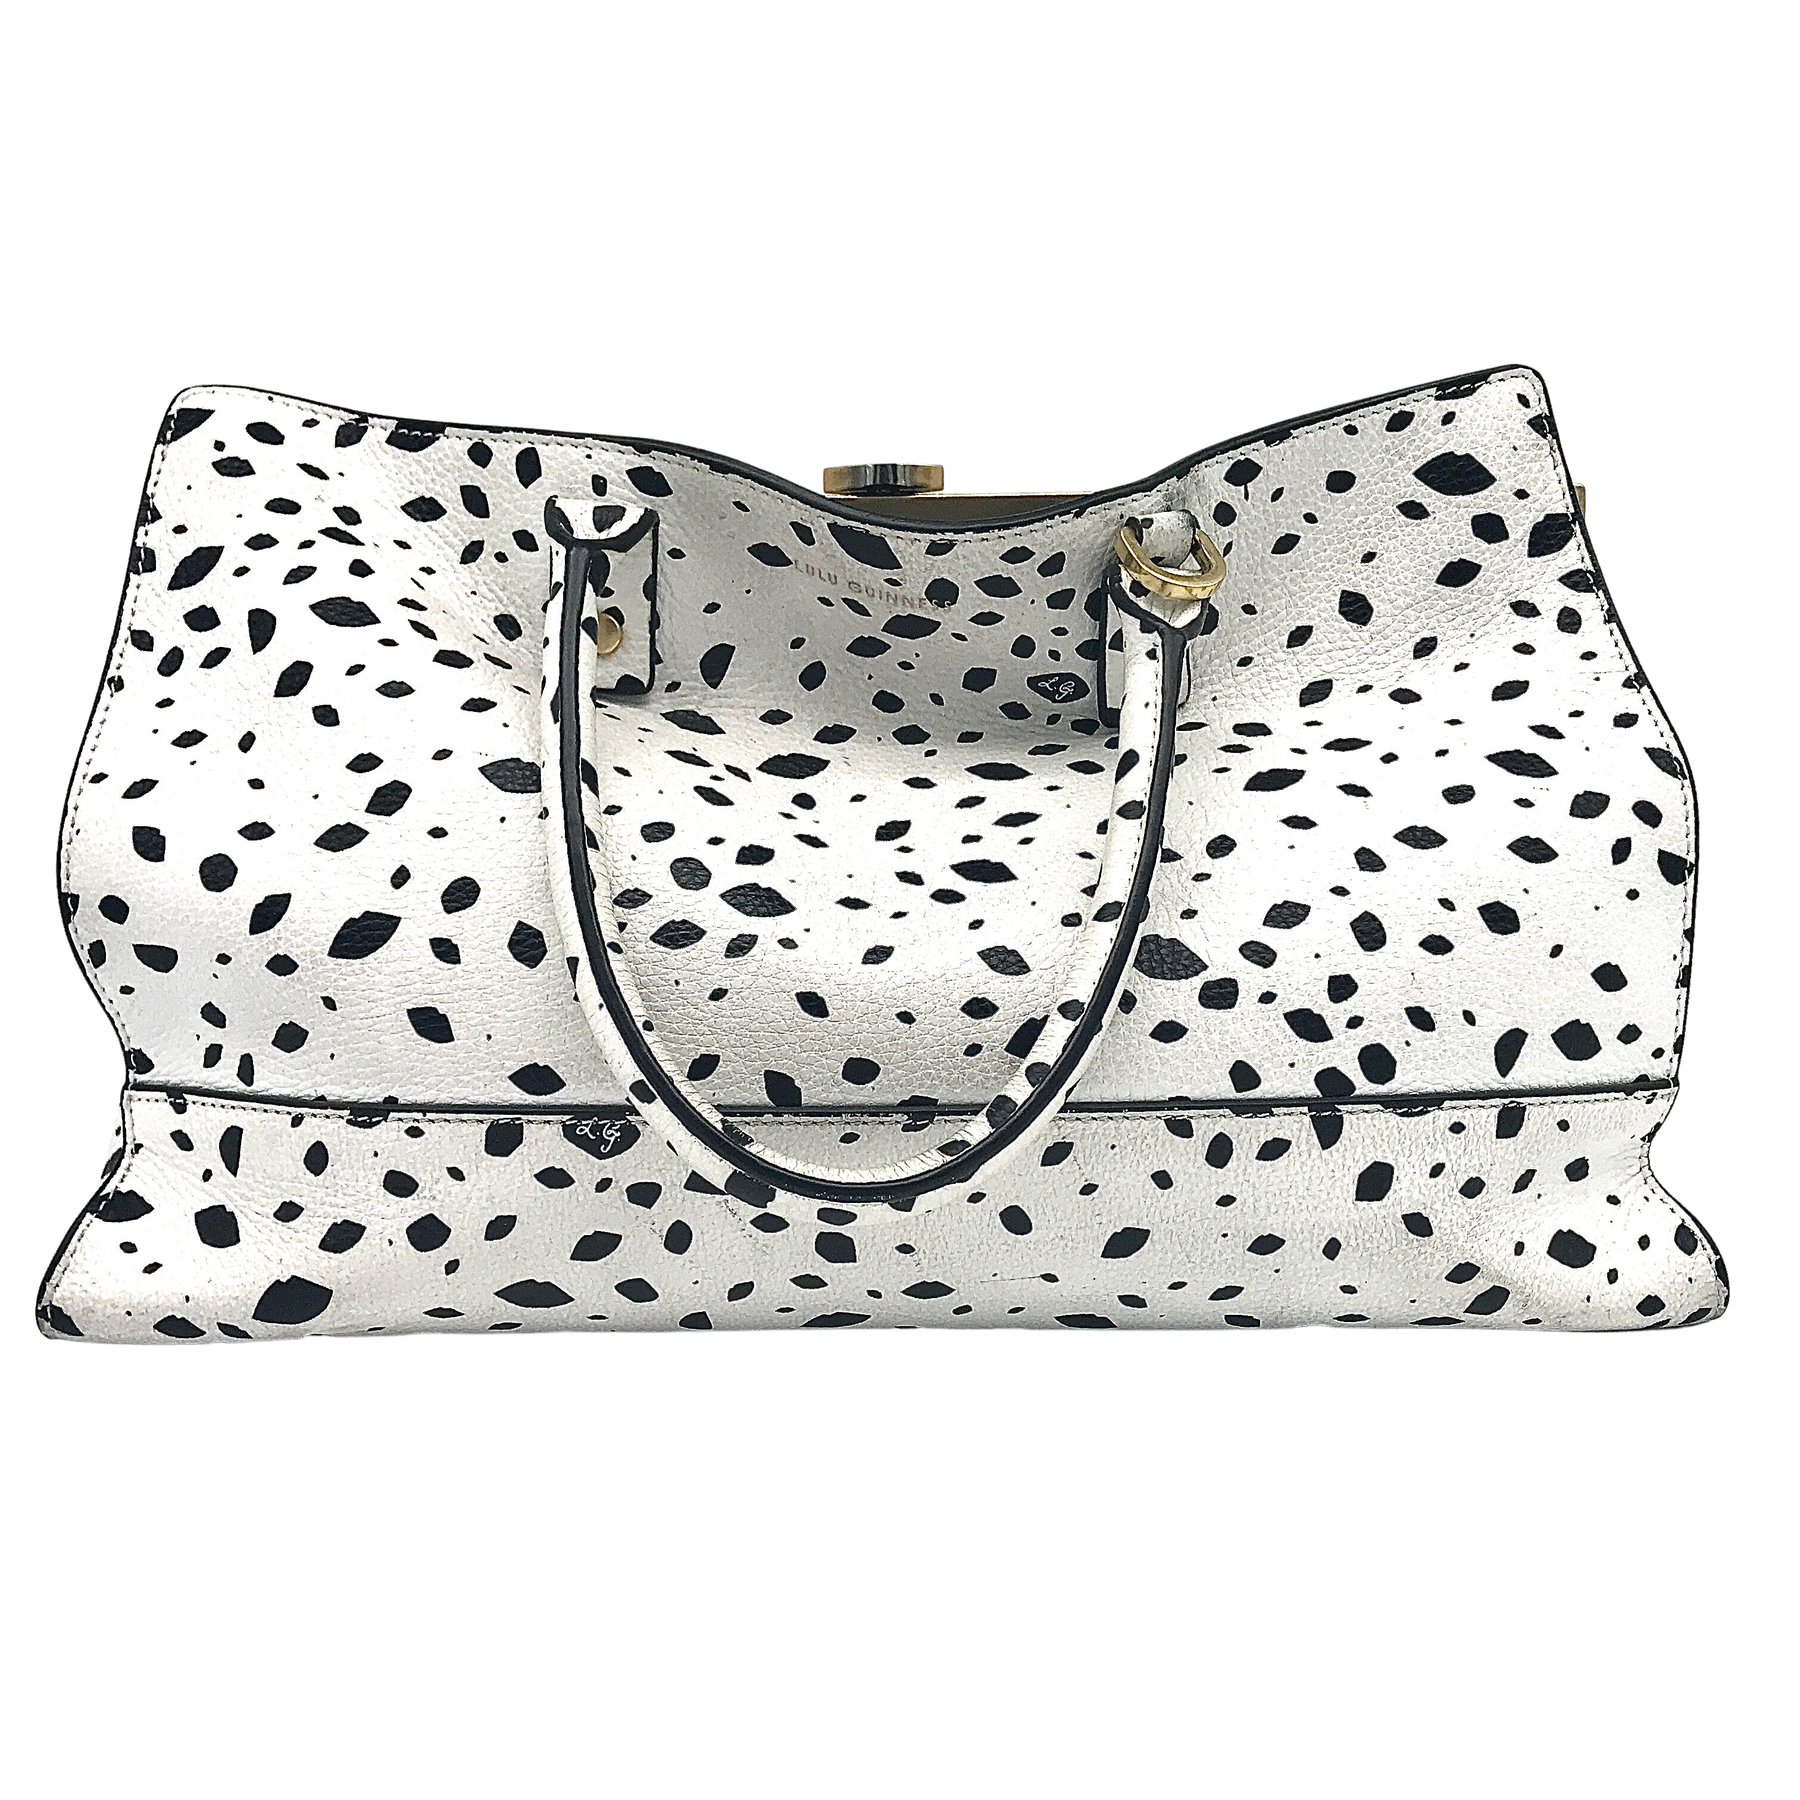 Lulu Guinness Dalmatian Handbag In Red And Black | eBay | Lulu guinness,  Handbags on sale, Handbag